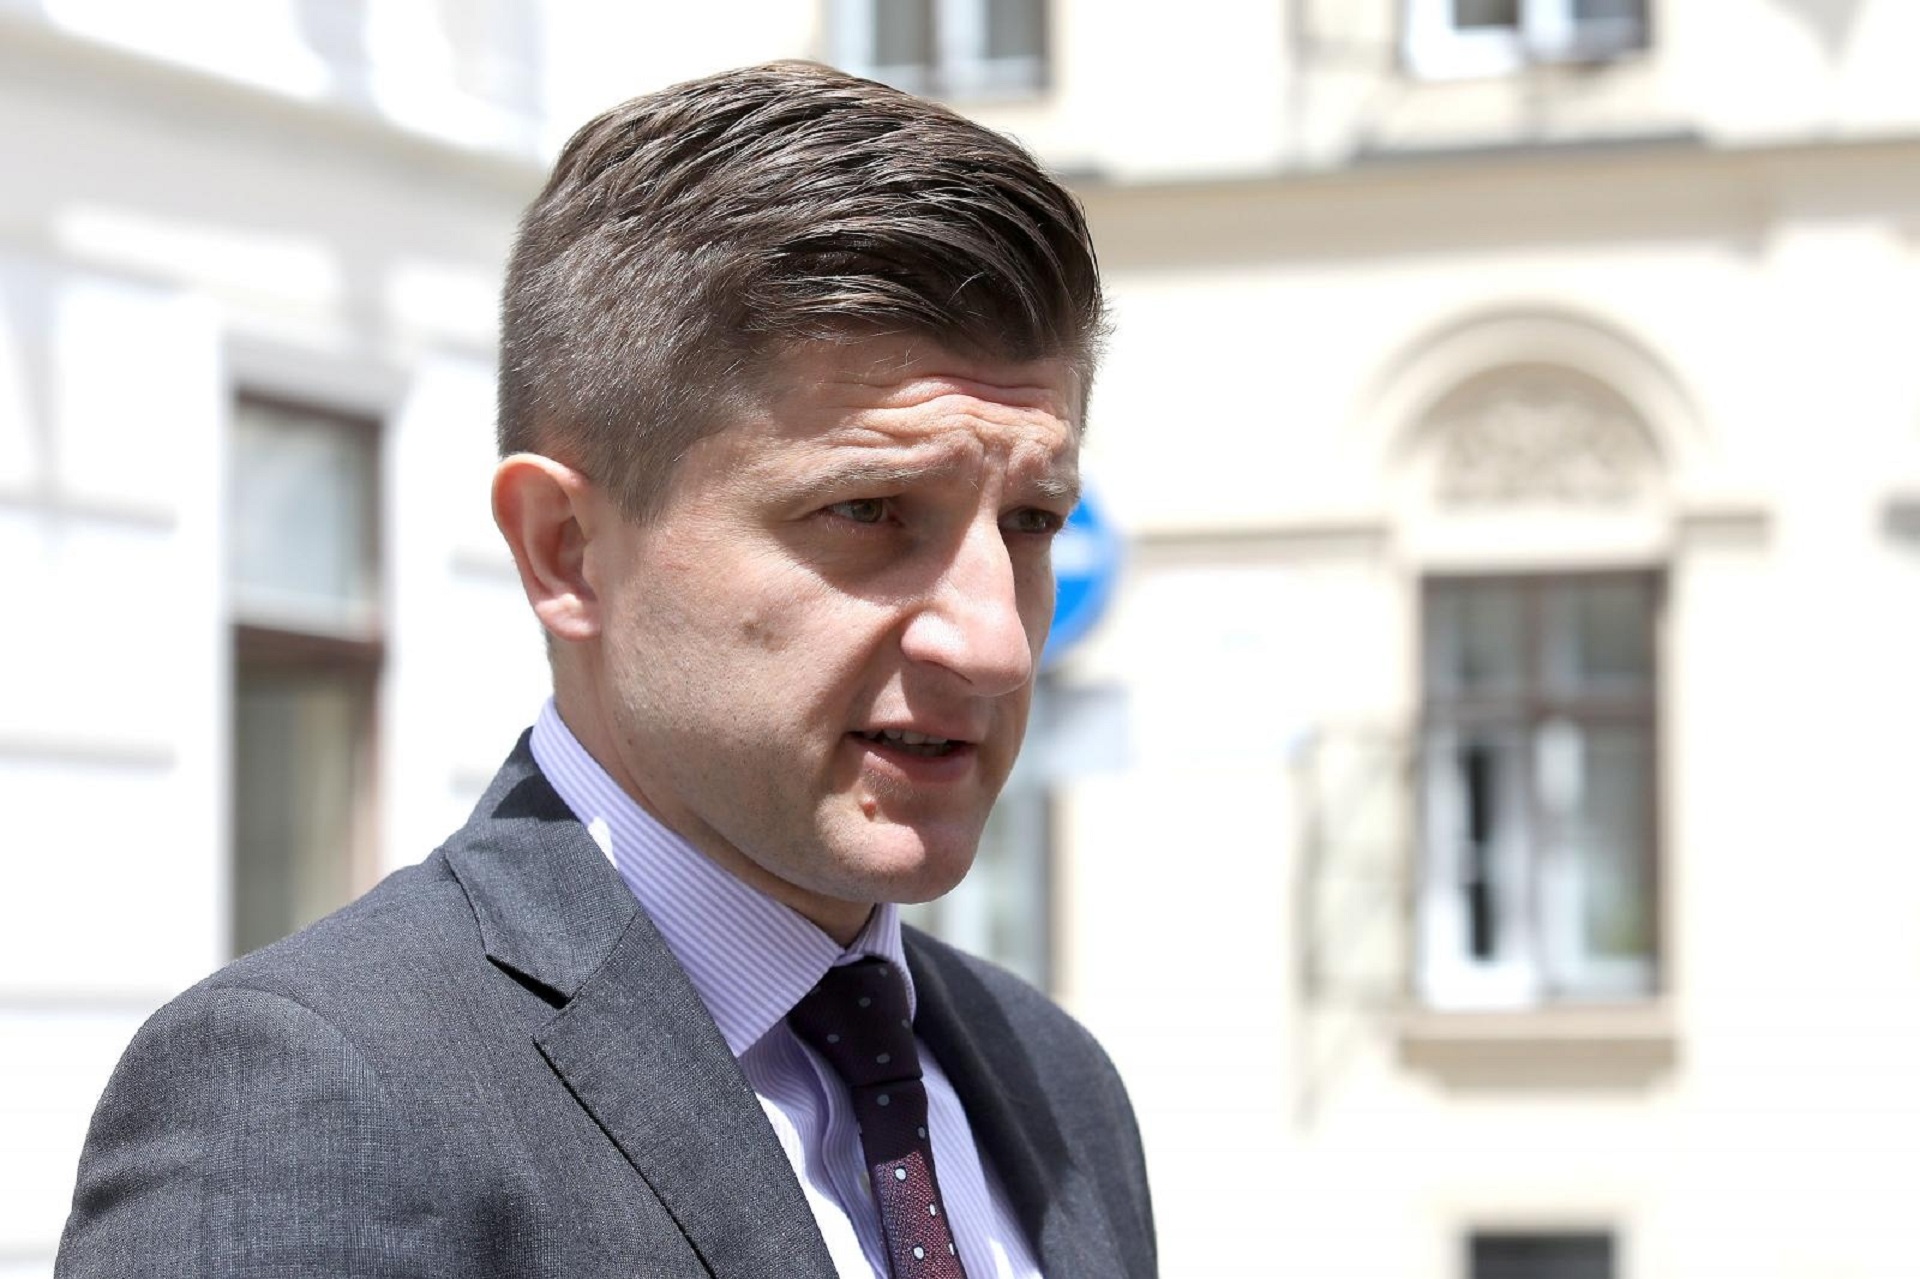 07.07.2020., Zagreb - Ministar financija Zdravko Maric komentirao je ispred Banskih dvora procjene pada BDP-a od 10,8%. Photo: Patrik Macek/PIXSELL